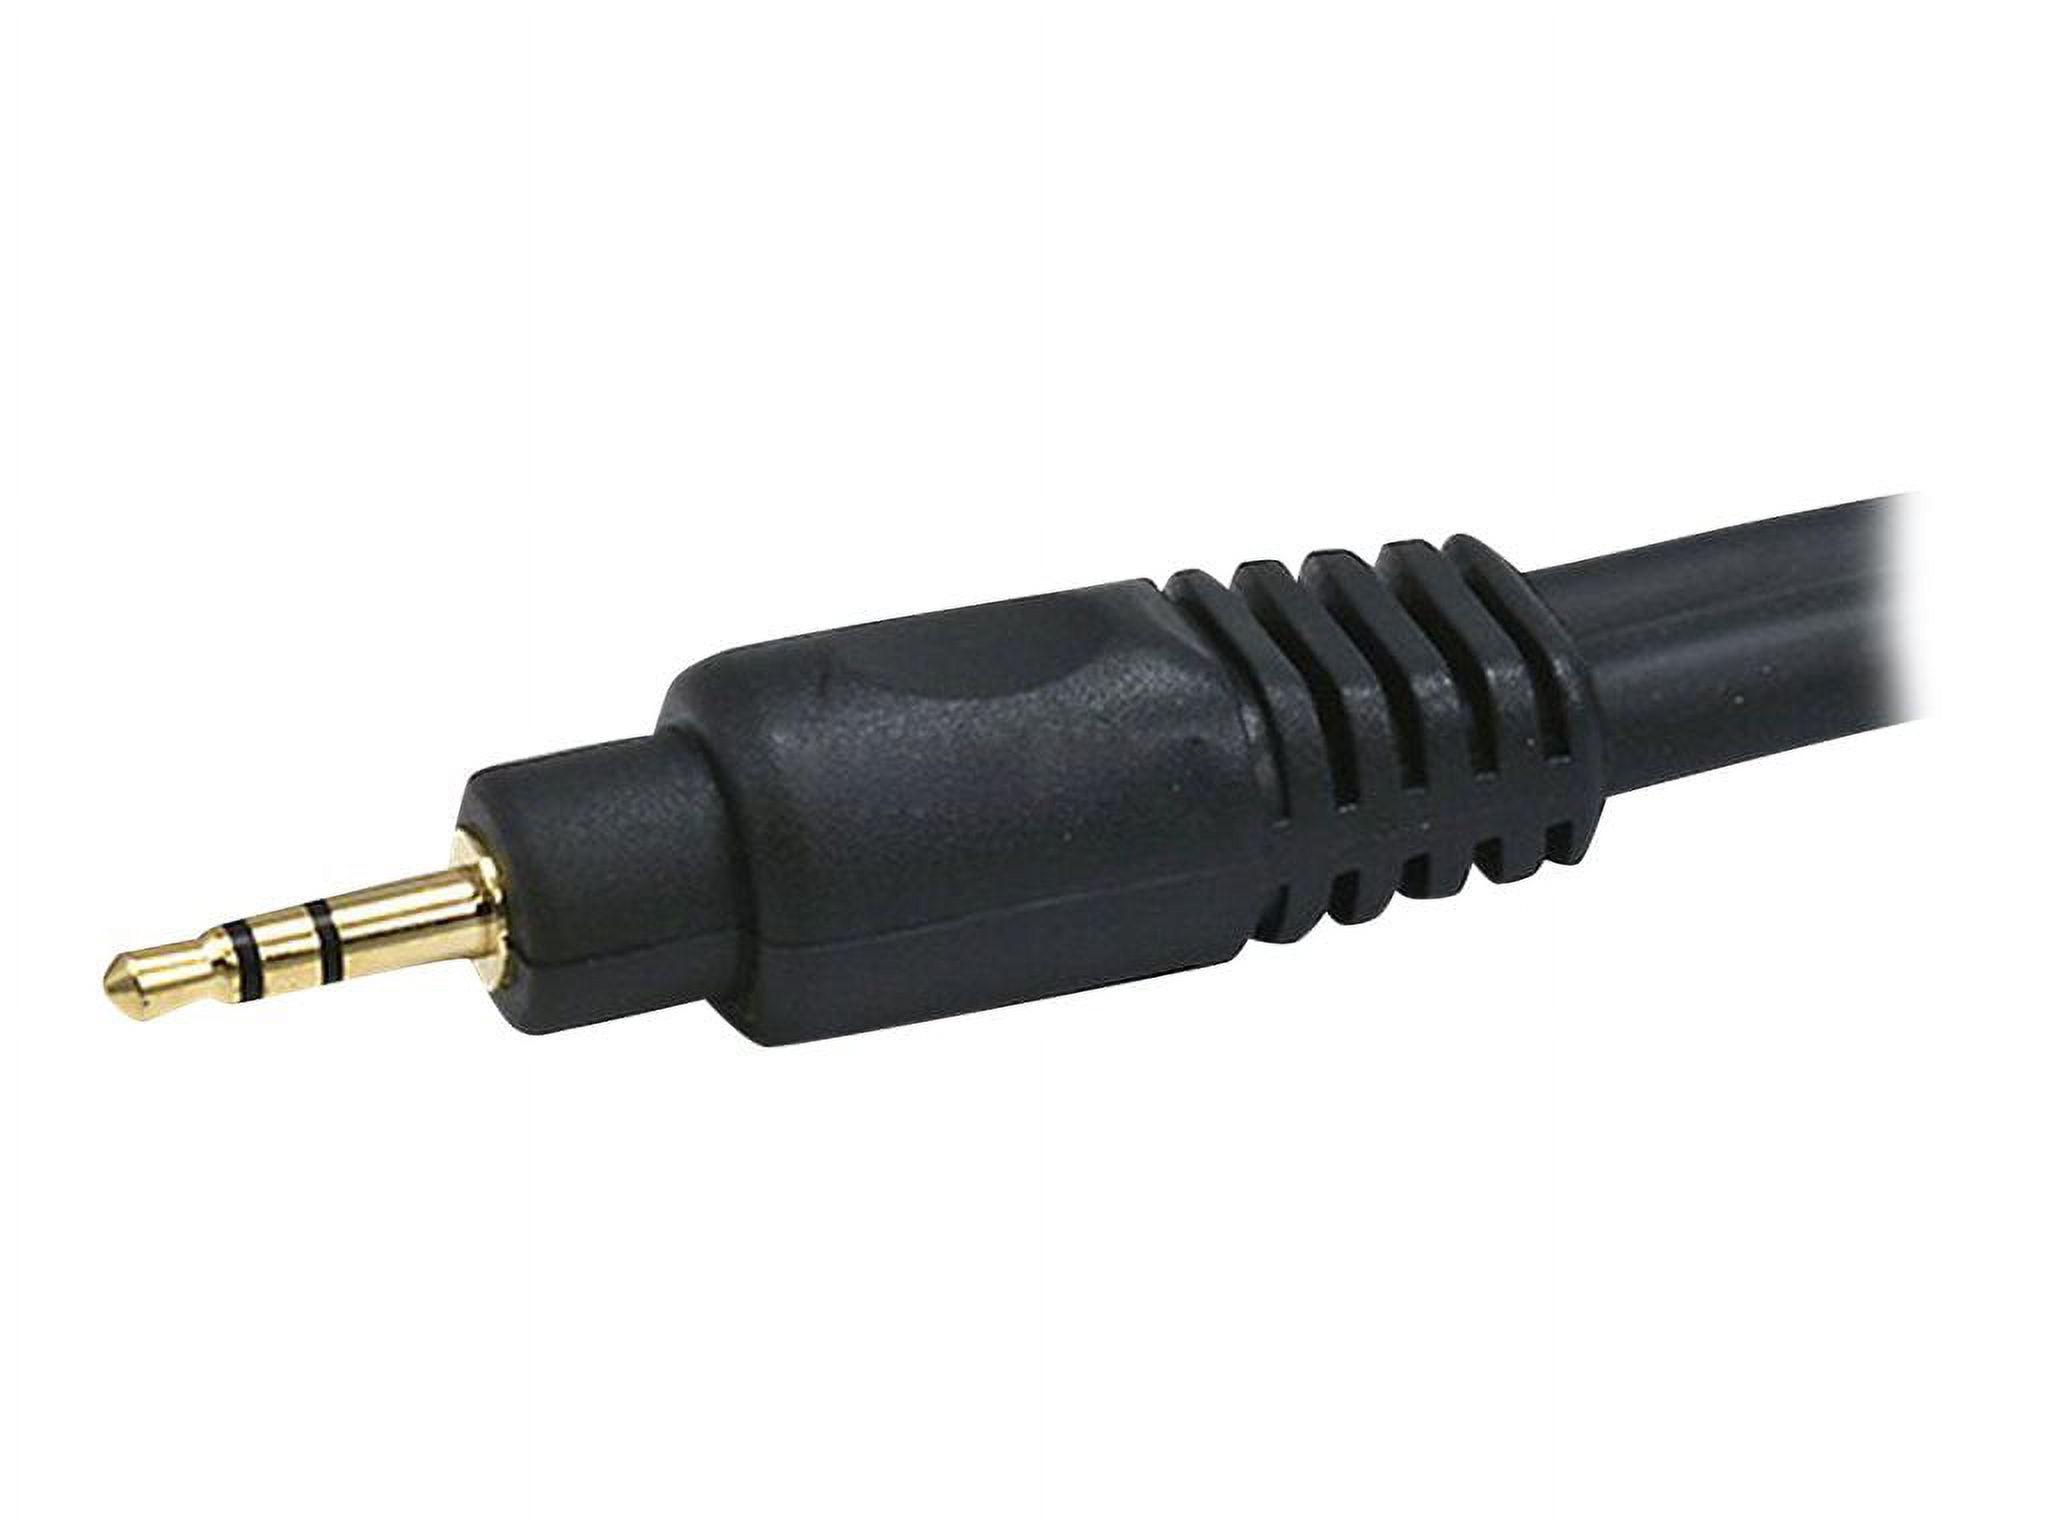 Monoprice Premium 5599 10' RCA Audio/Video Cable Black 105599 - image 4 of 4